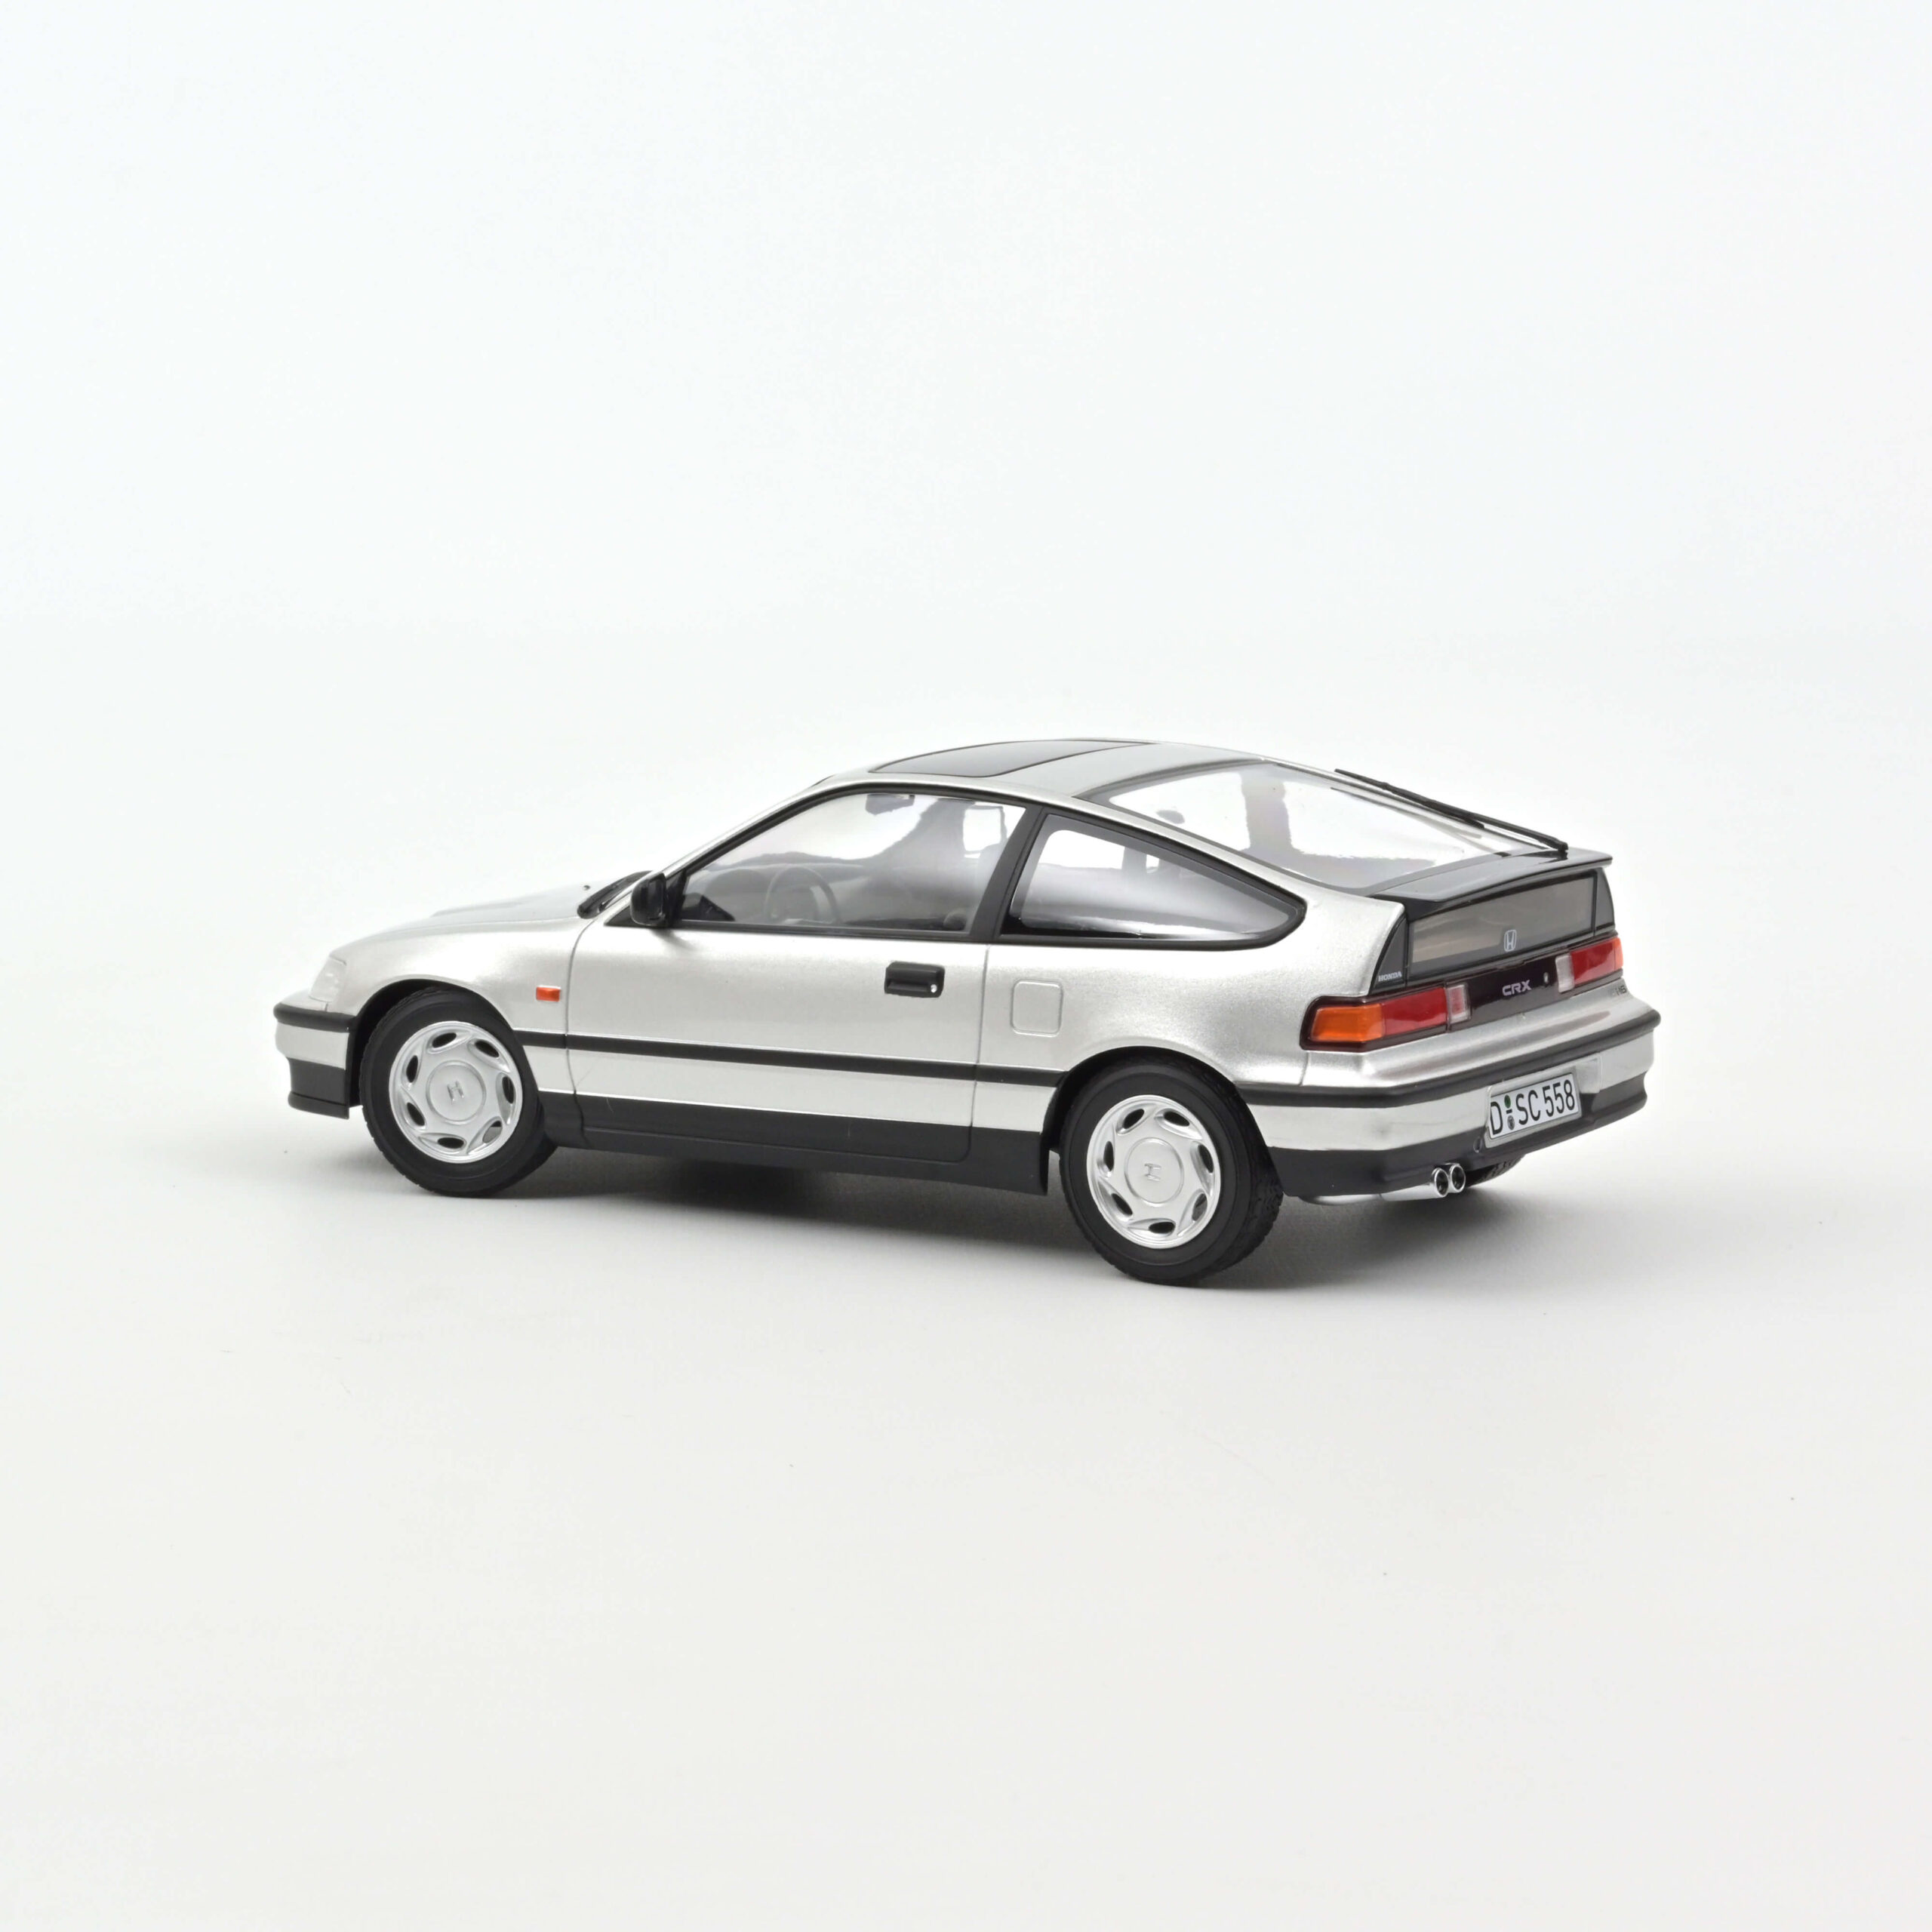 Honda CRX 1990 Silver